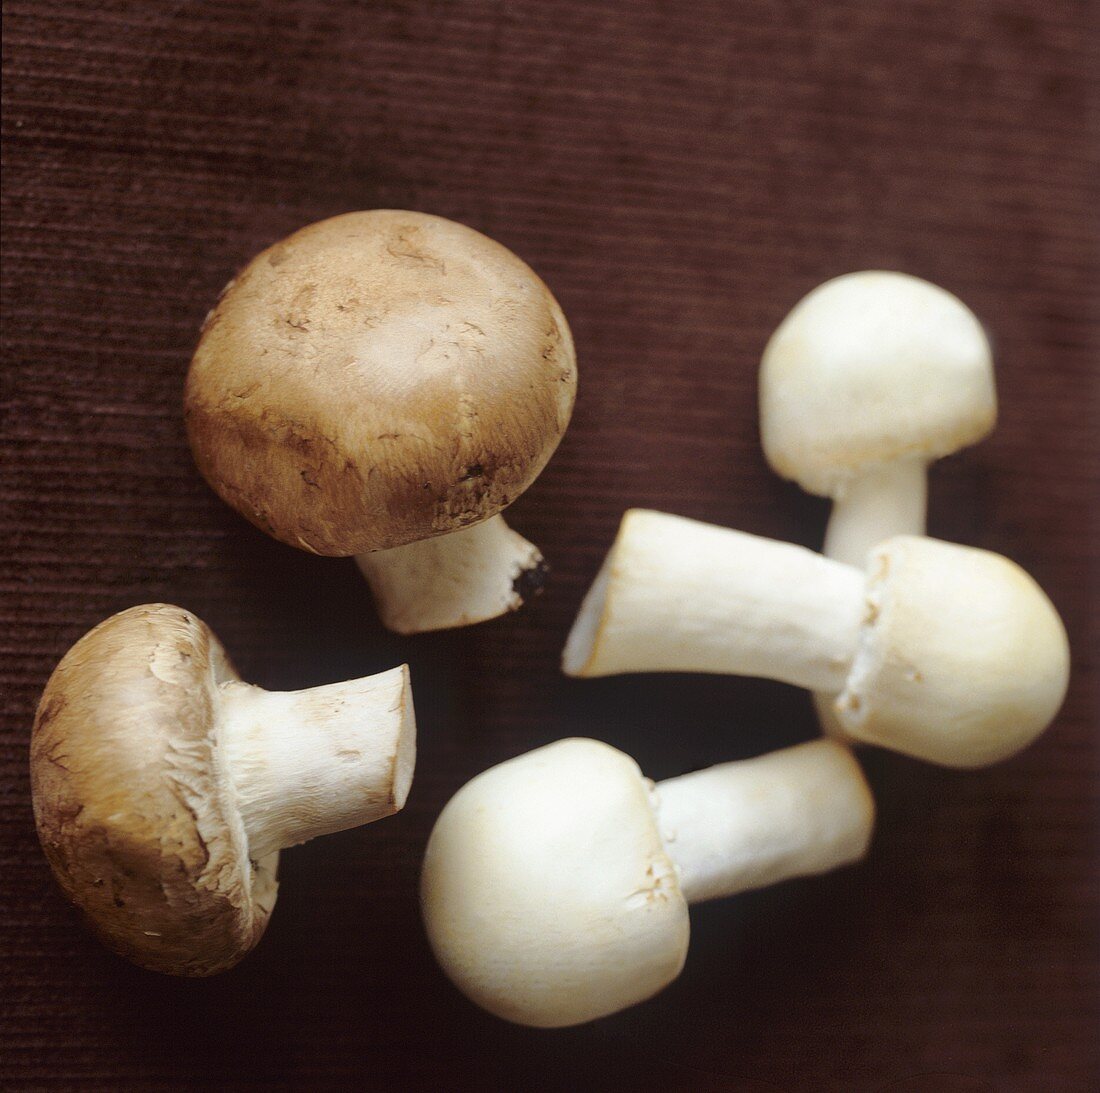 Button mushrooms and chestnut mushrooms